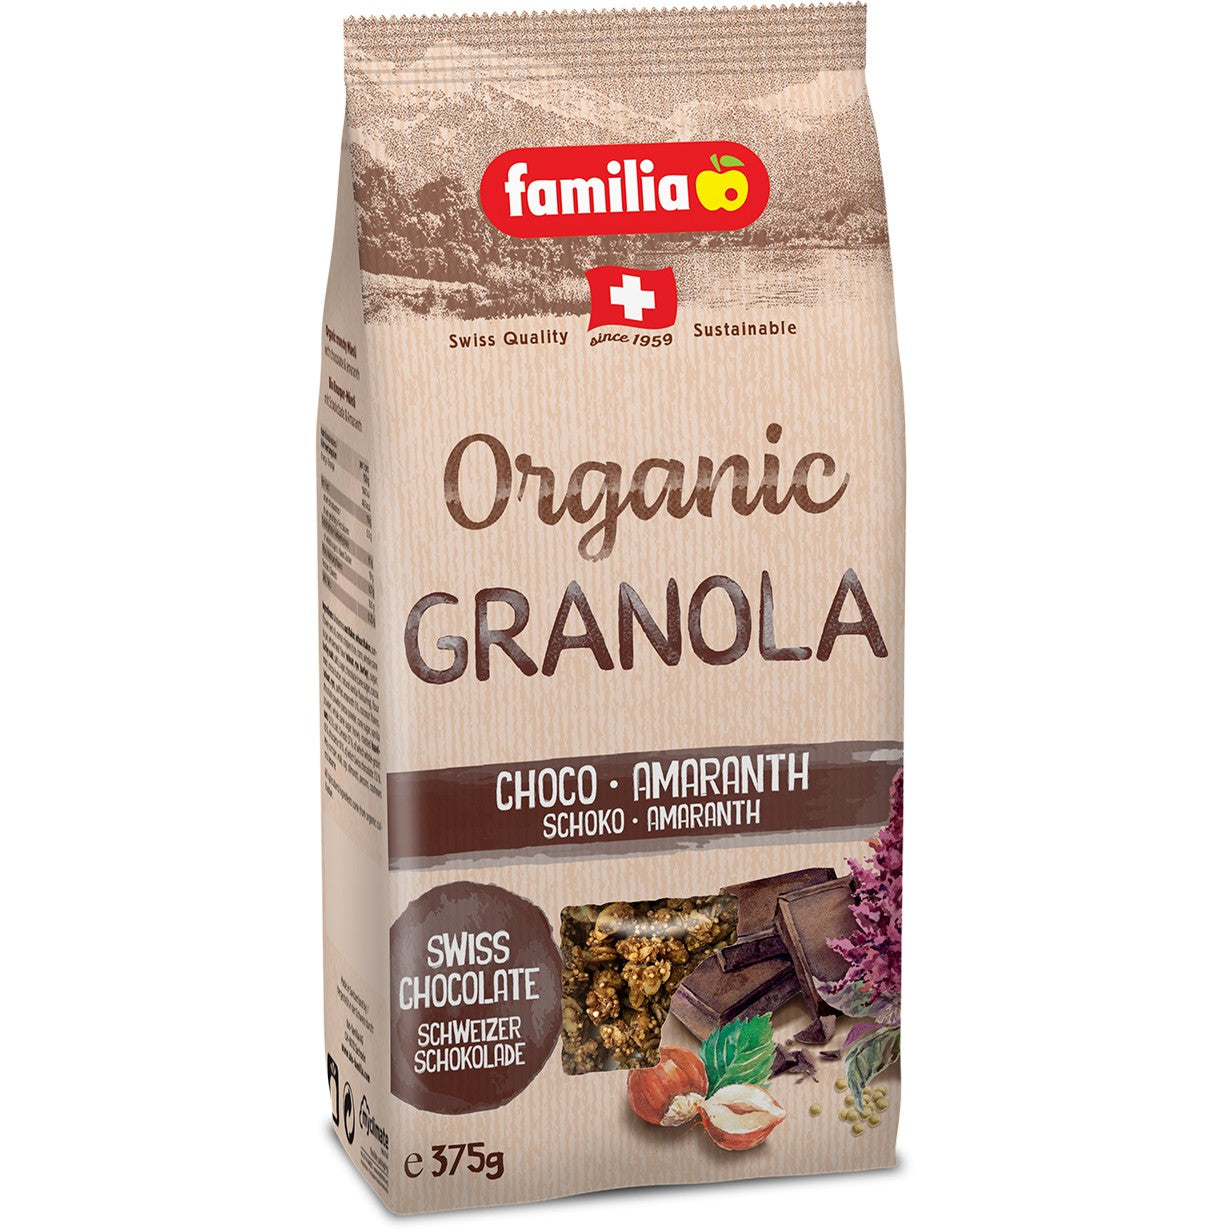 Familia Organic Granola - Choco Amaranth 375g Familia